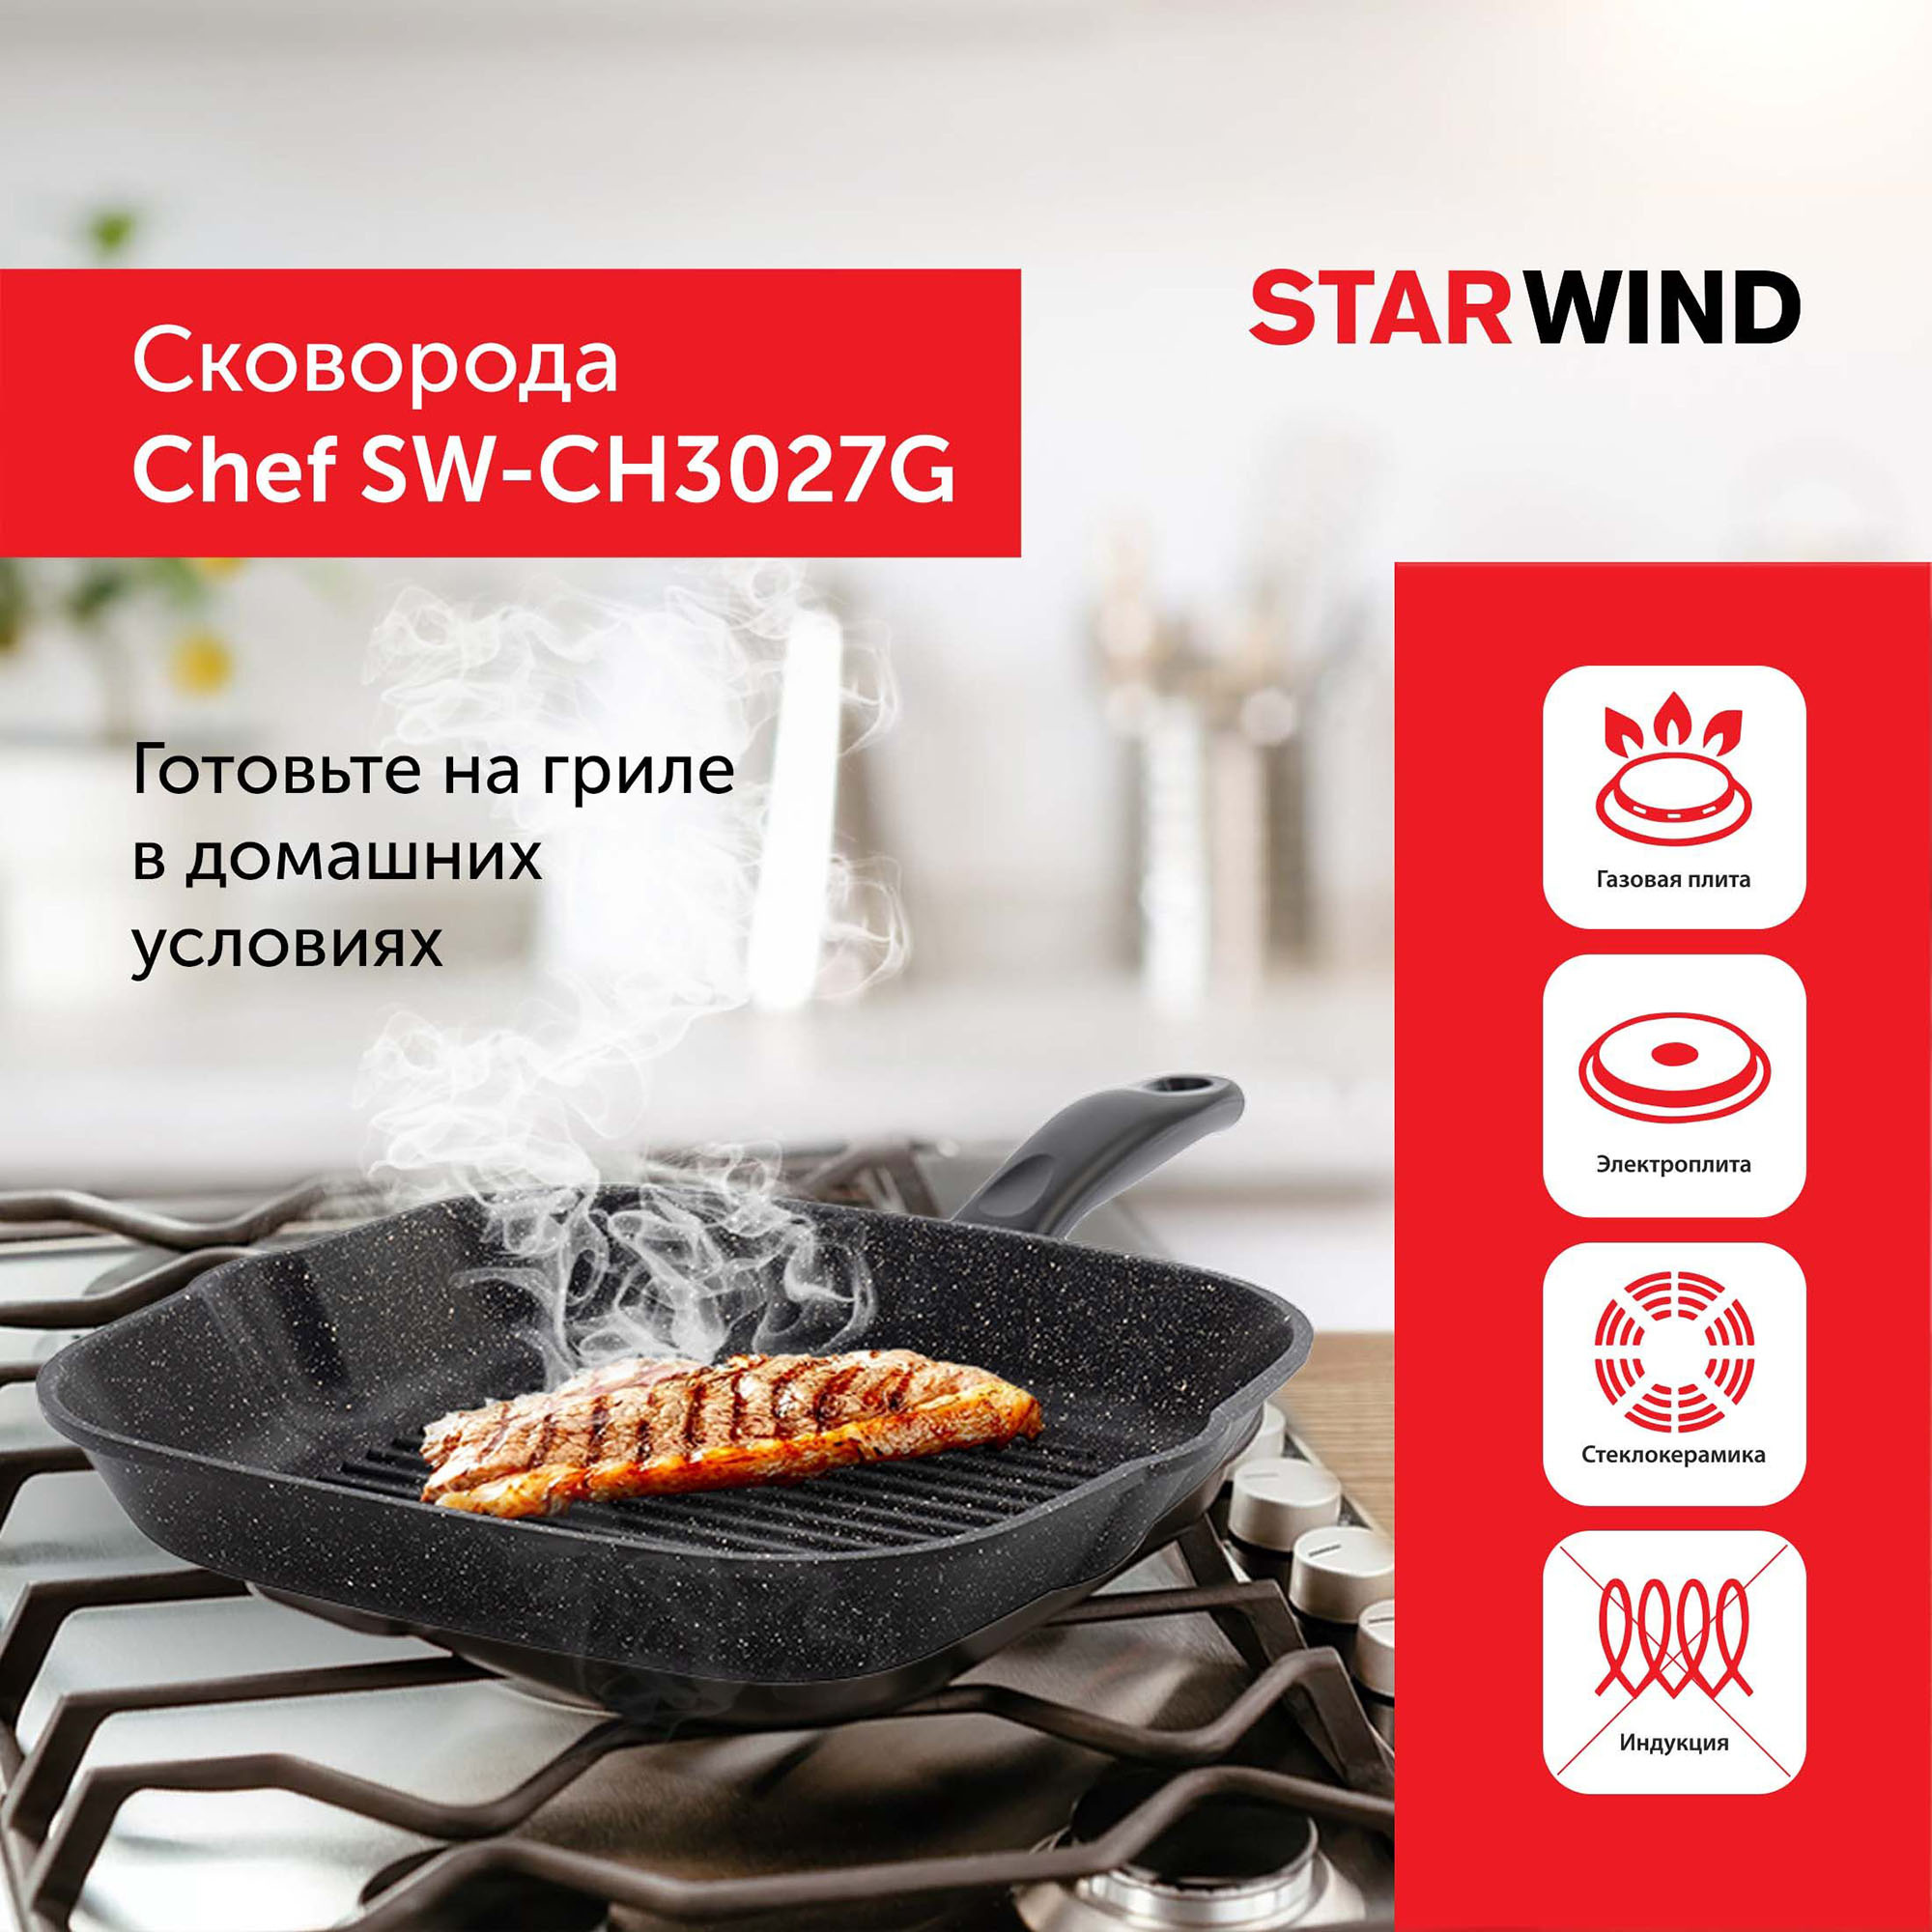 Сковорода-гриль Starwind Chef SW-CH3027G, черный, Pfluon покрытие, с крышкой (sw-ch3027g/кор) от магазина Старвинд